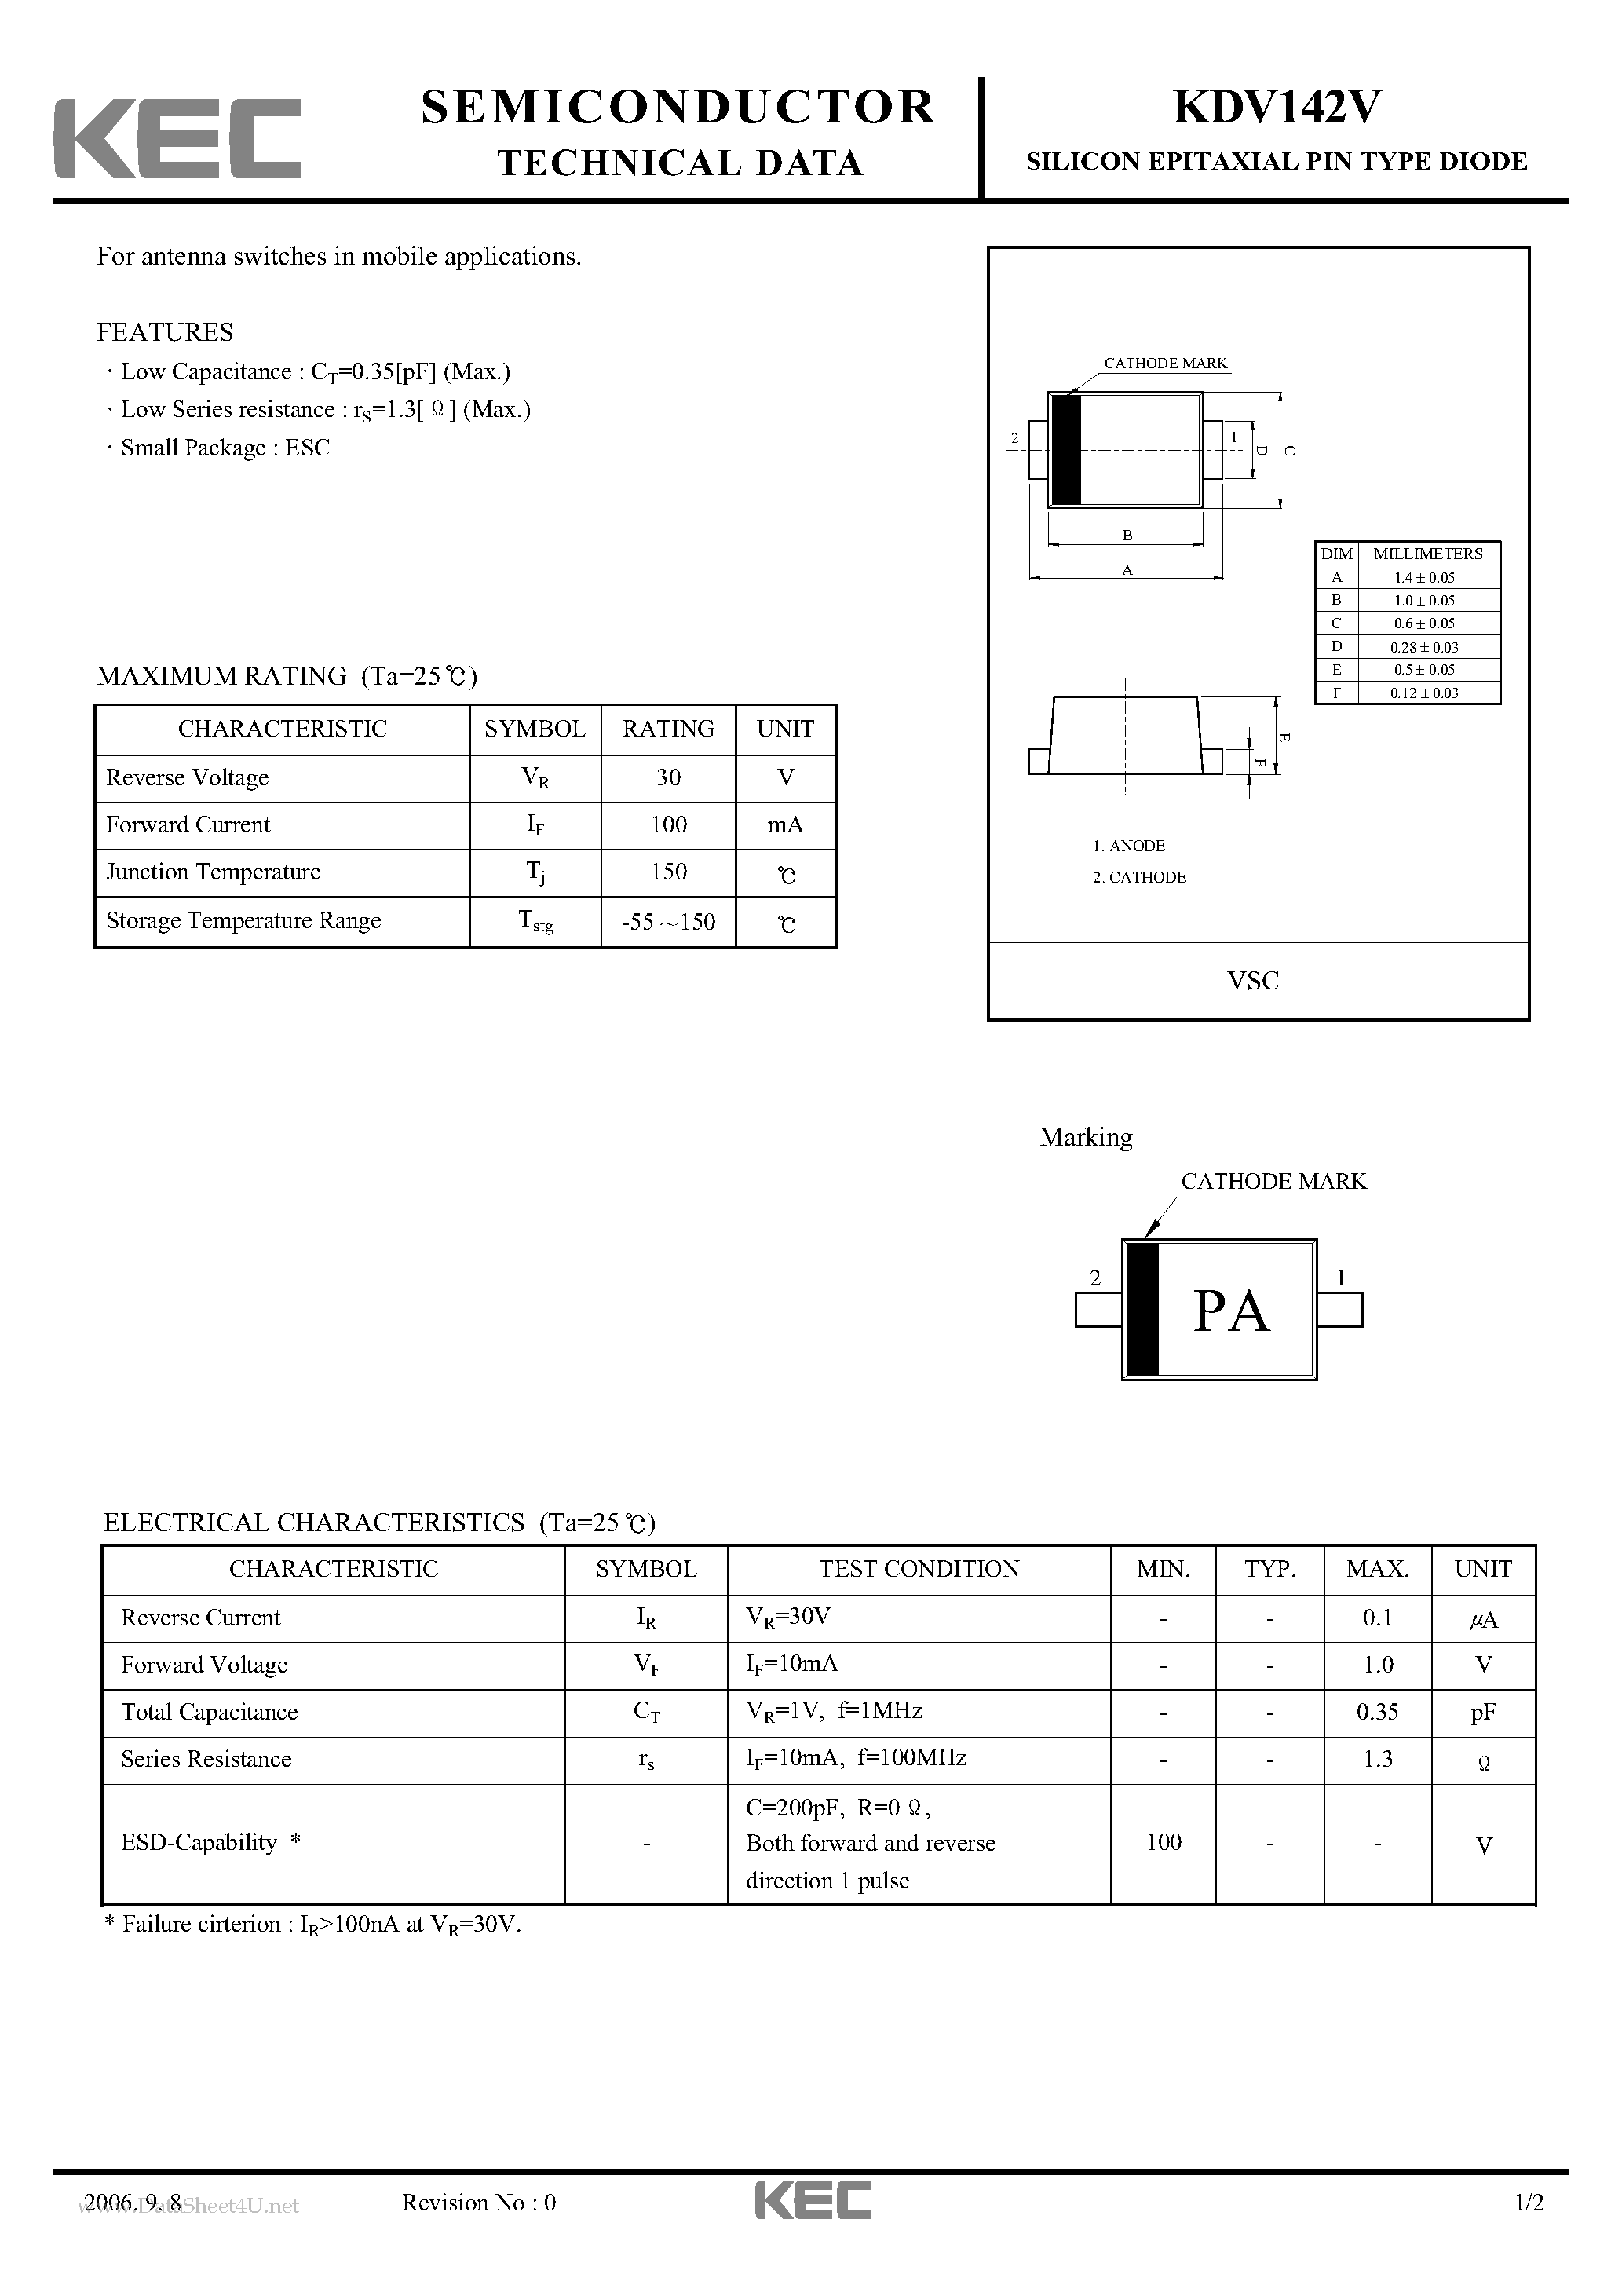 Datasheet KDV142V - SILICON EPITAXIAL PIN TYPE DIODE page 1